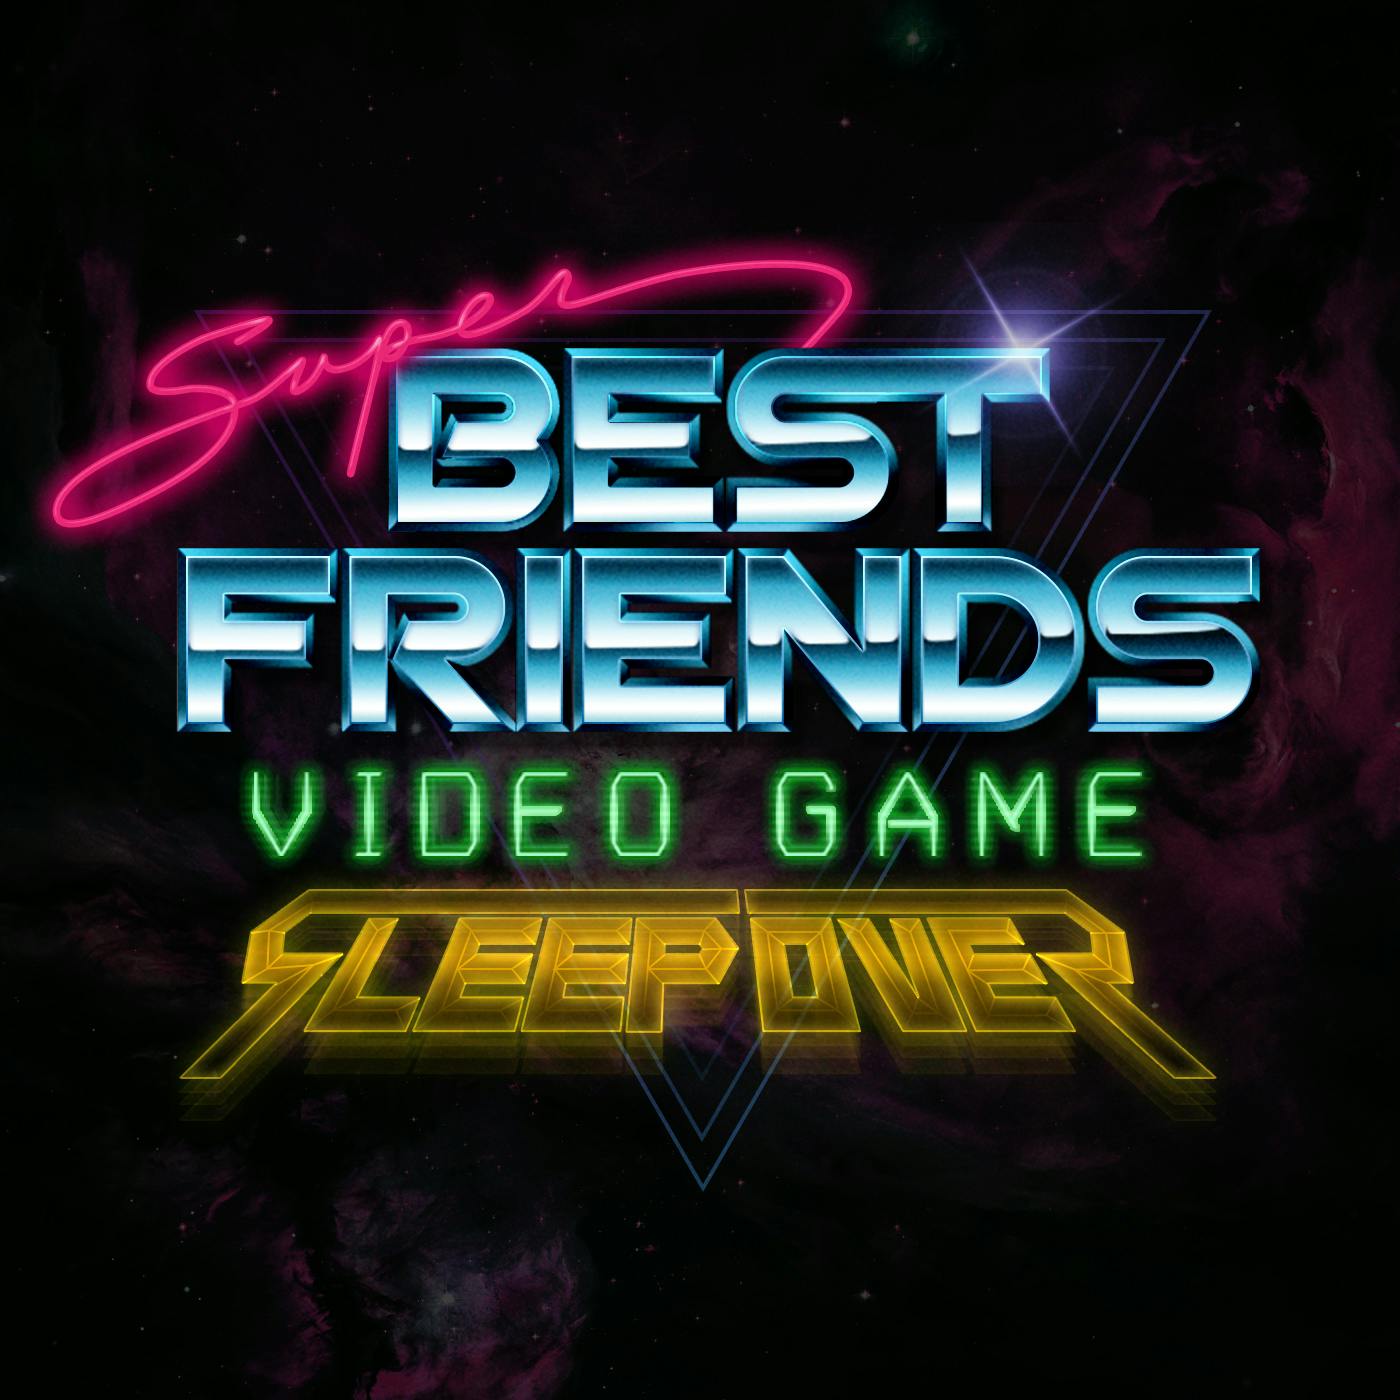 Super Best Friends Video Game Sleepover - Episode 27